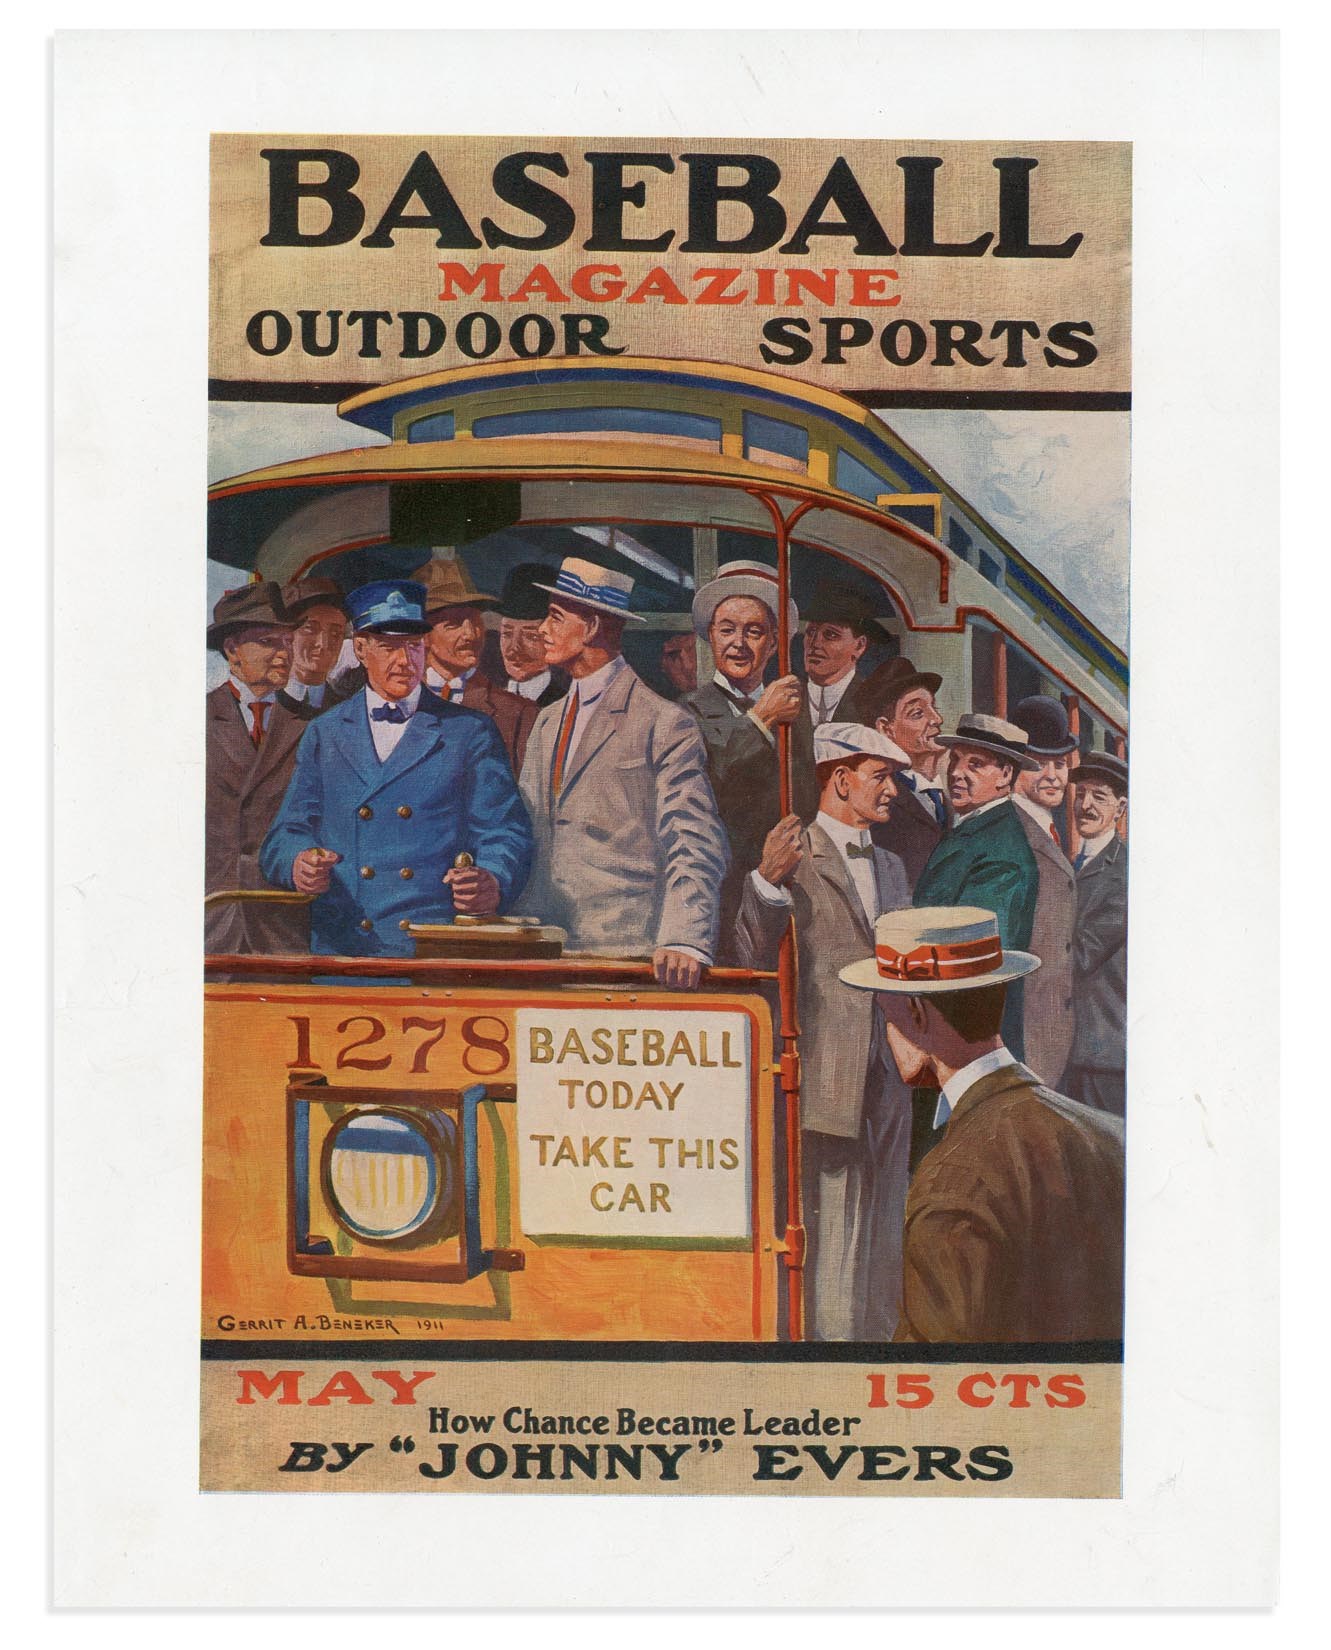 May 1911 Baseball Magazine Proof Cover